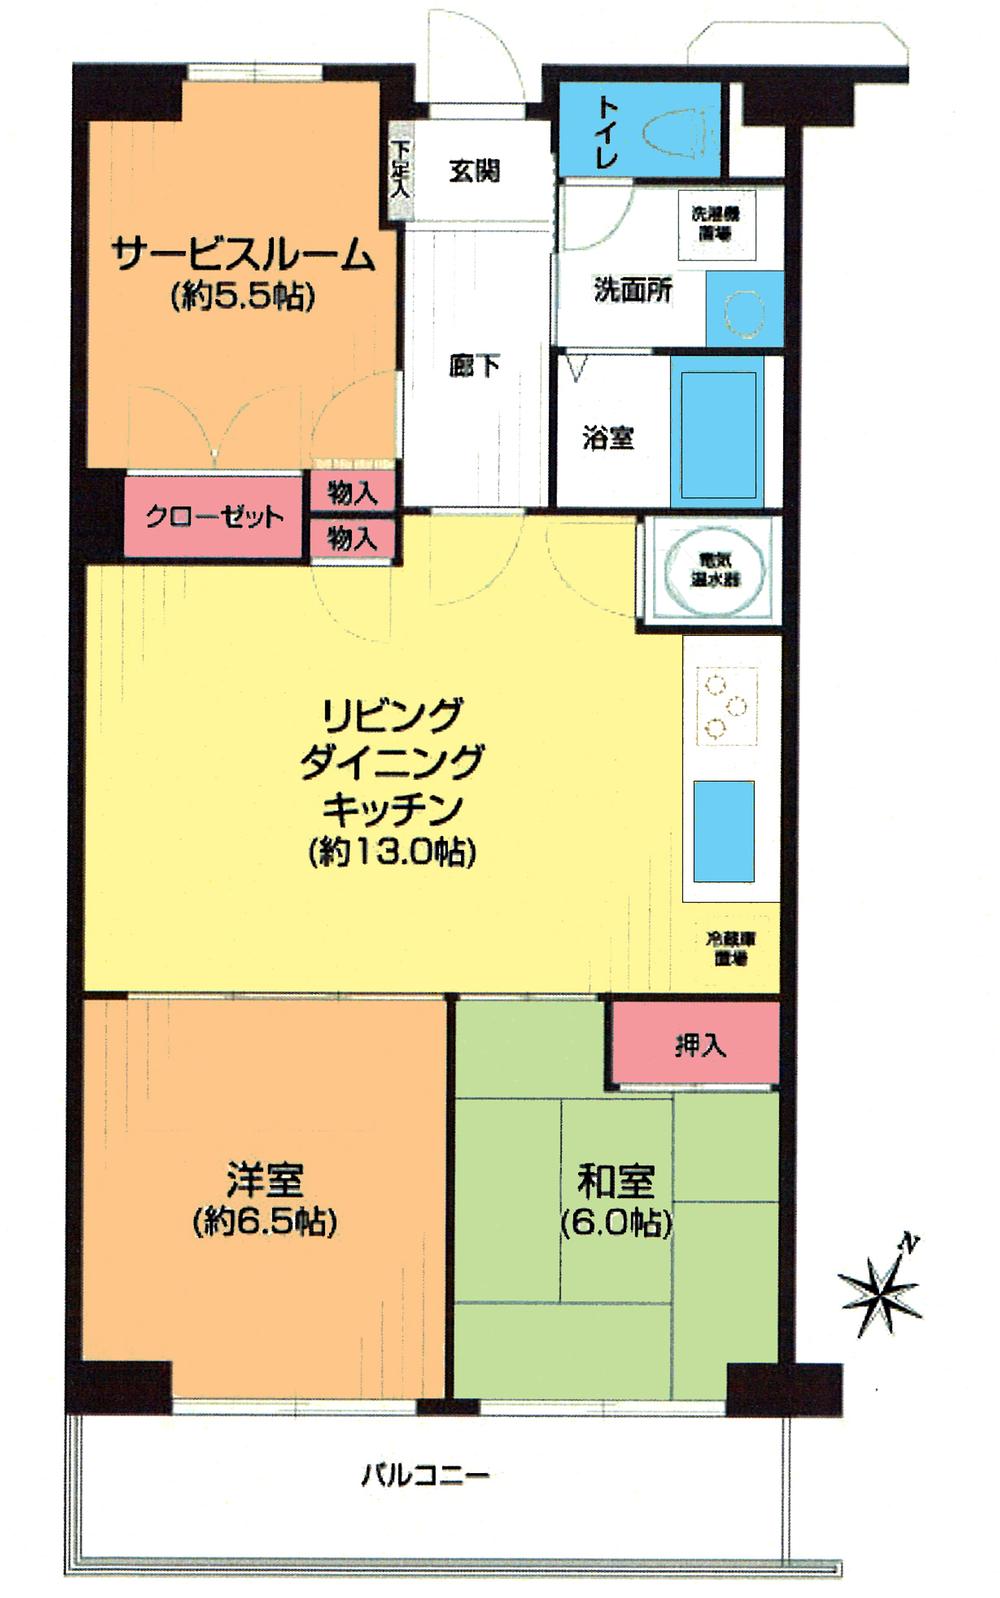 Floor plan. 3LDK, Price 10.8 million yen, Occupied area 71.61 sq m , Balcony area 8.4 sq m floor plan